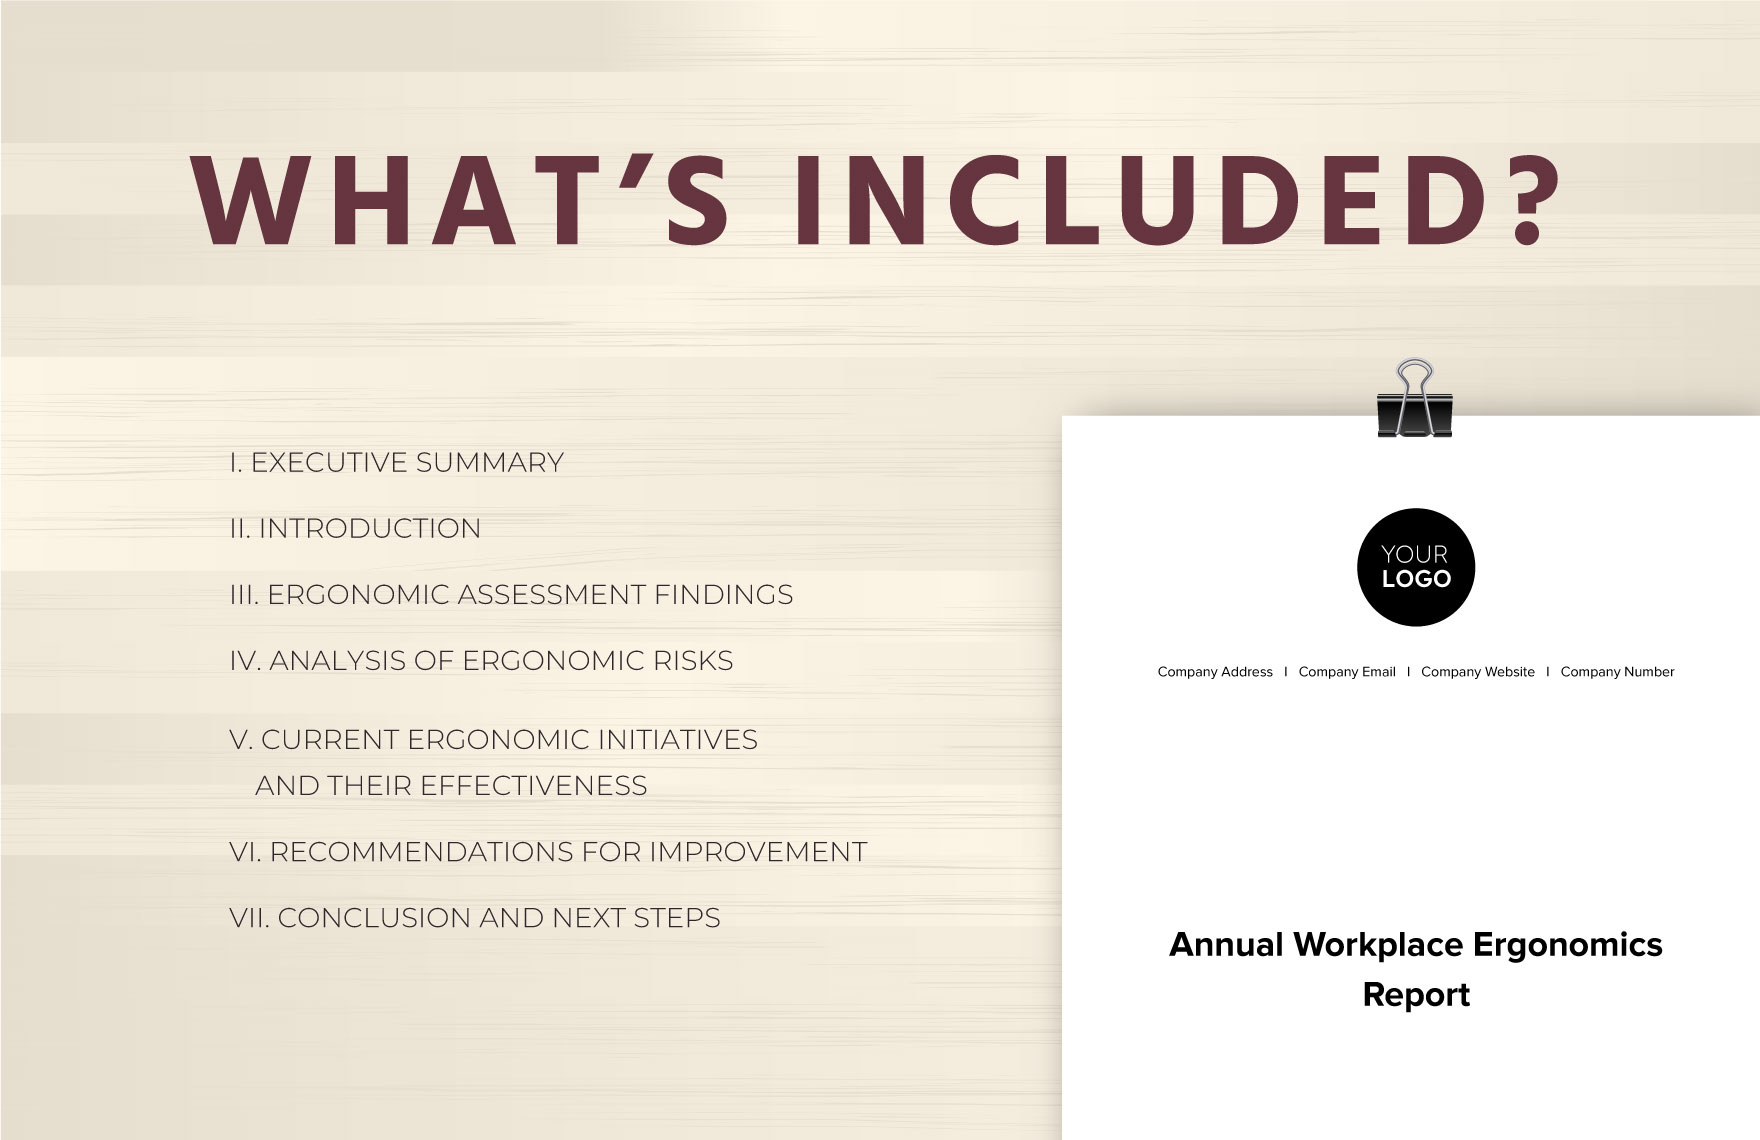 Annual Workplace Ergonomics Report Template